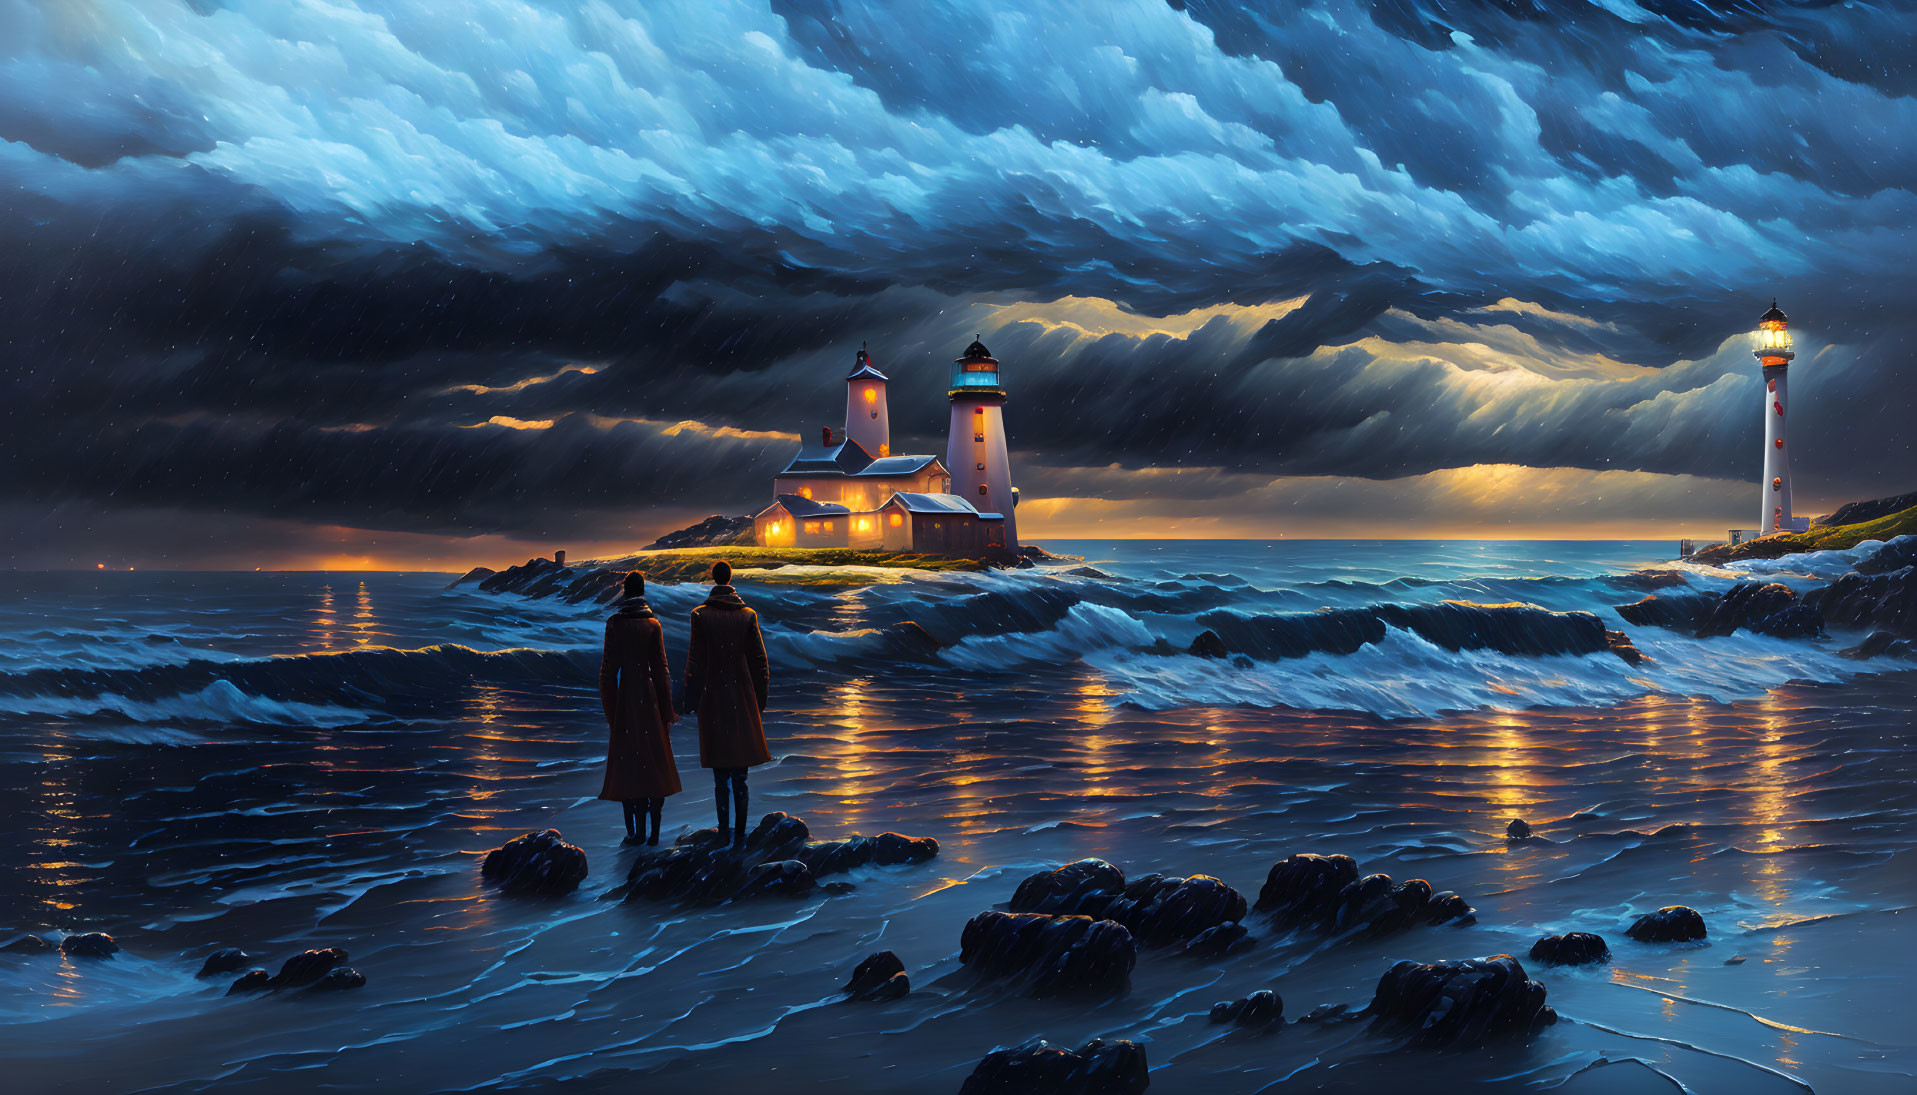 Dusk shoreline scene with lighthouse, dramatic sky, and reflective sea